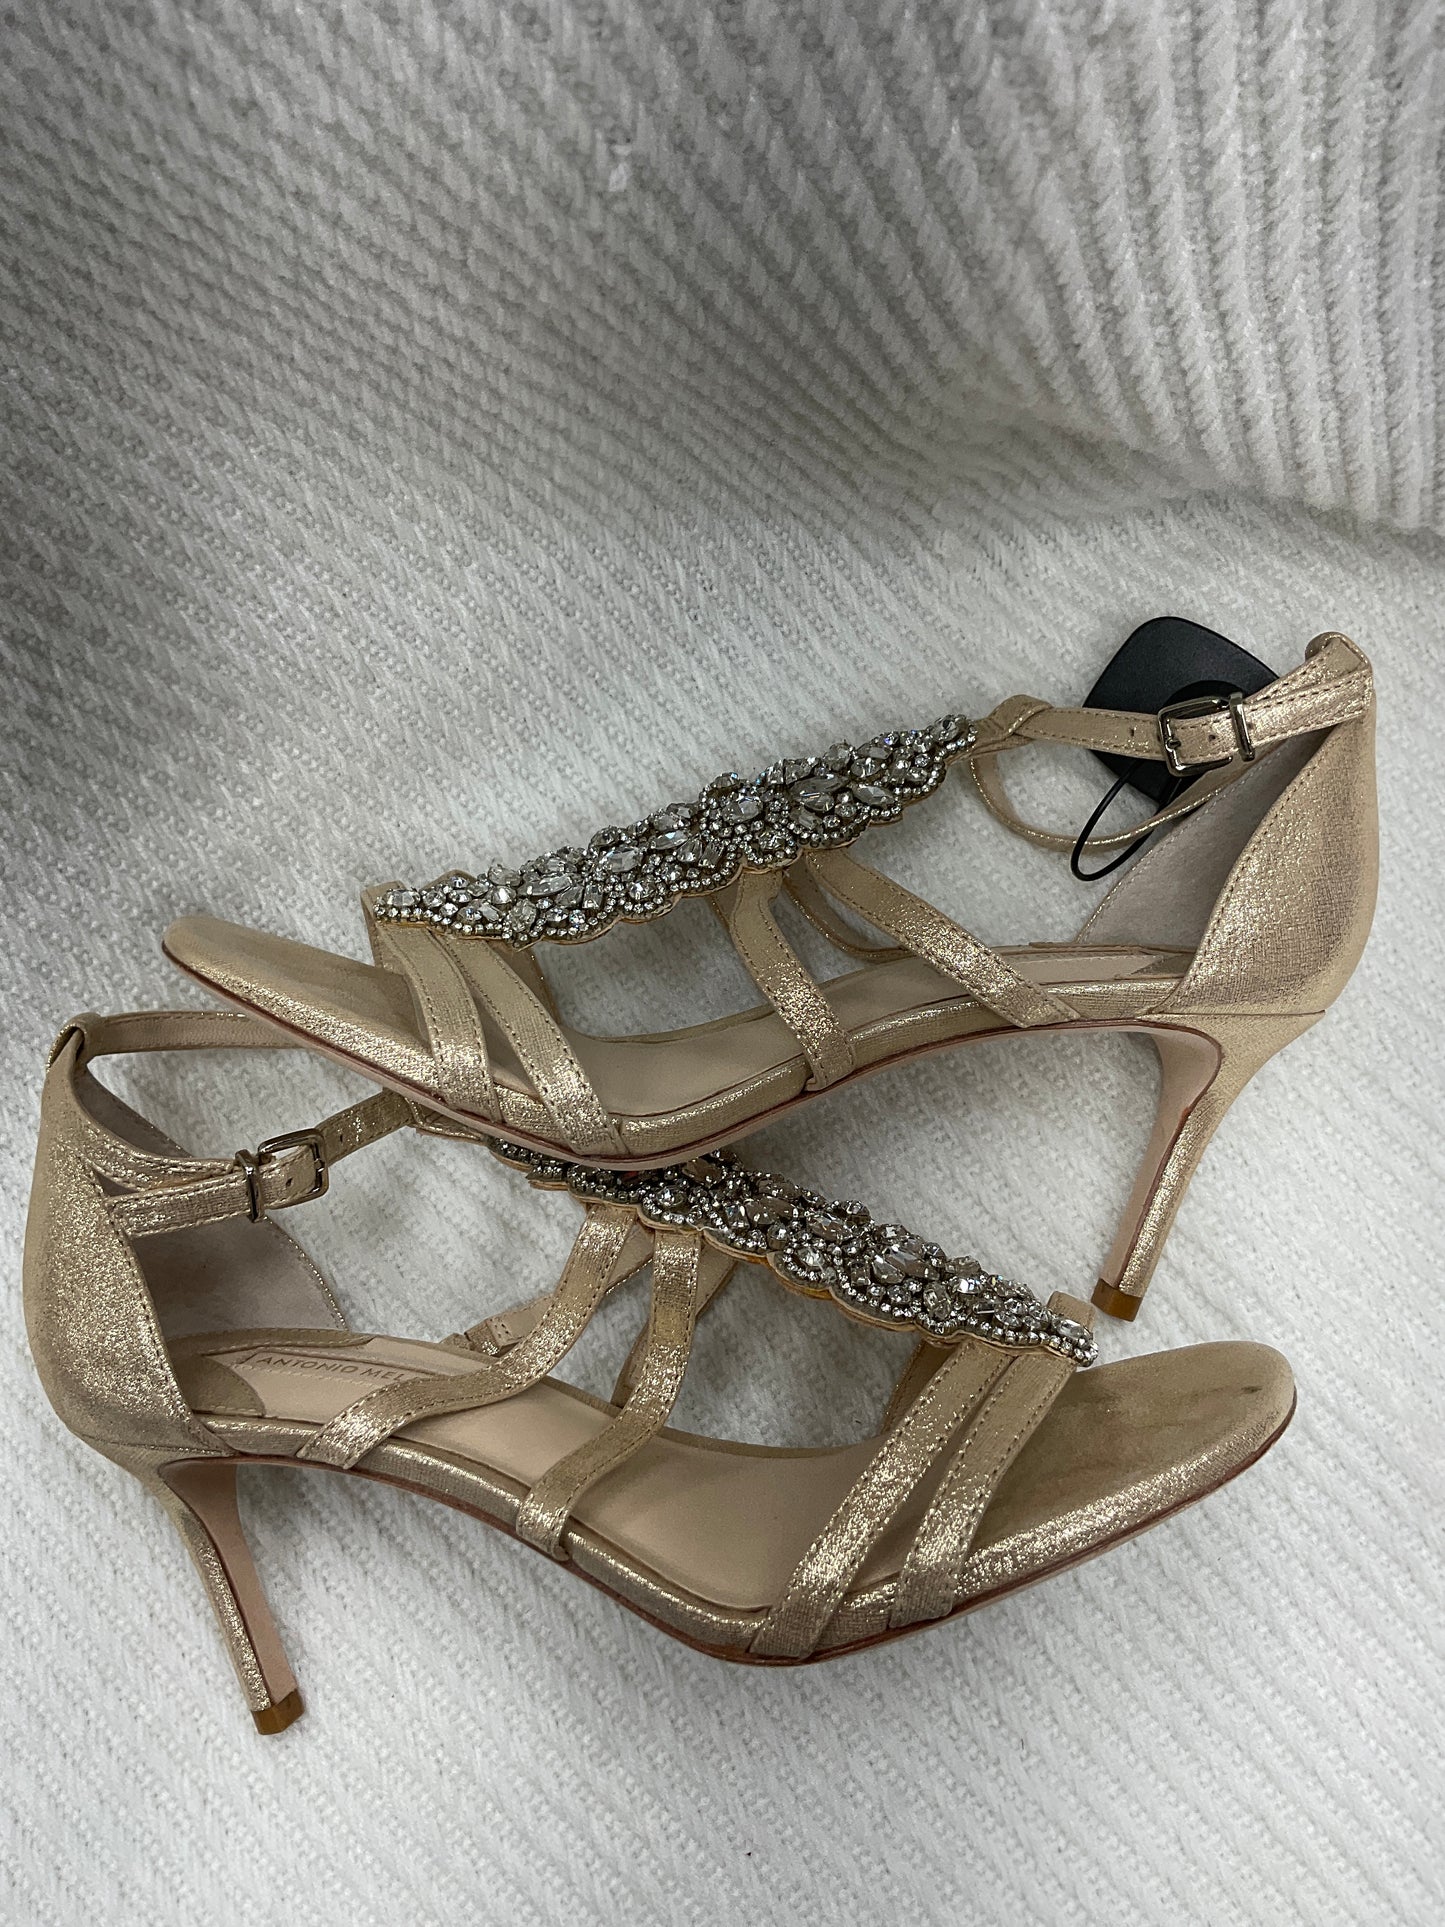 Sandals Heels Stiletto By Antonio Melani  Size: 10